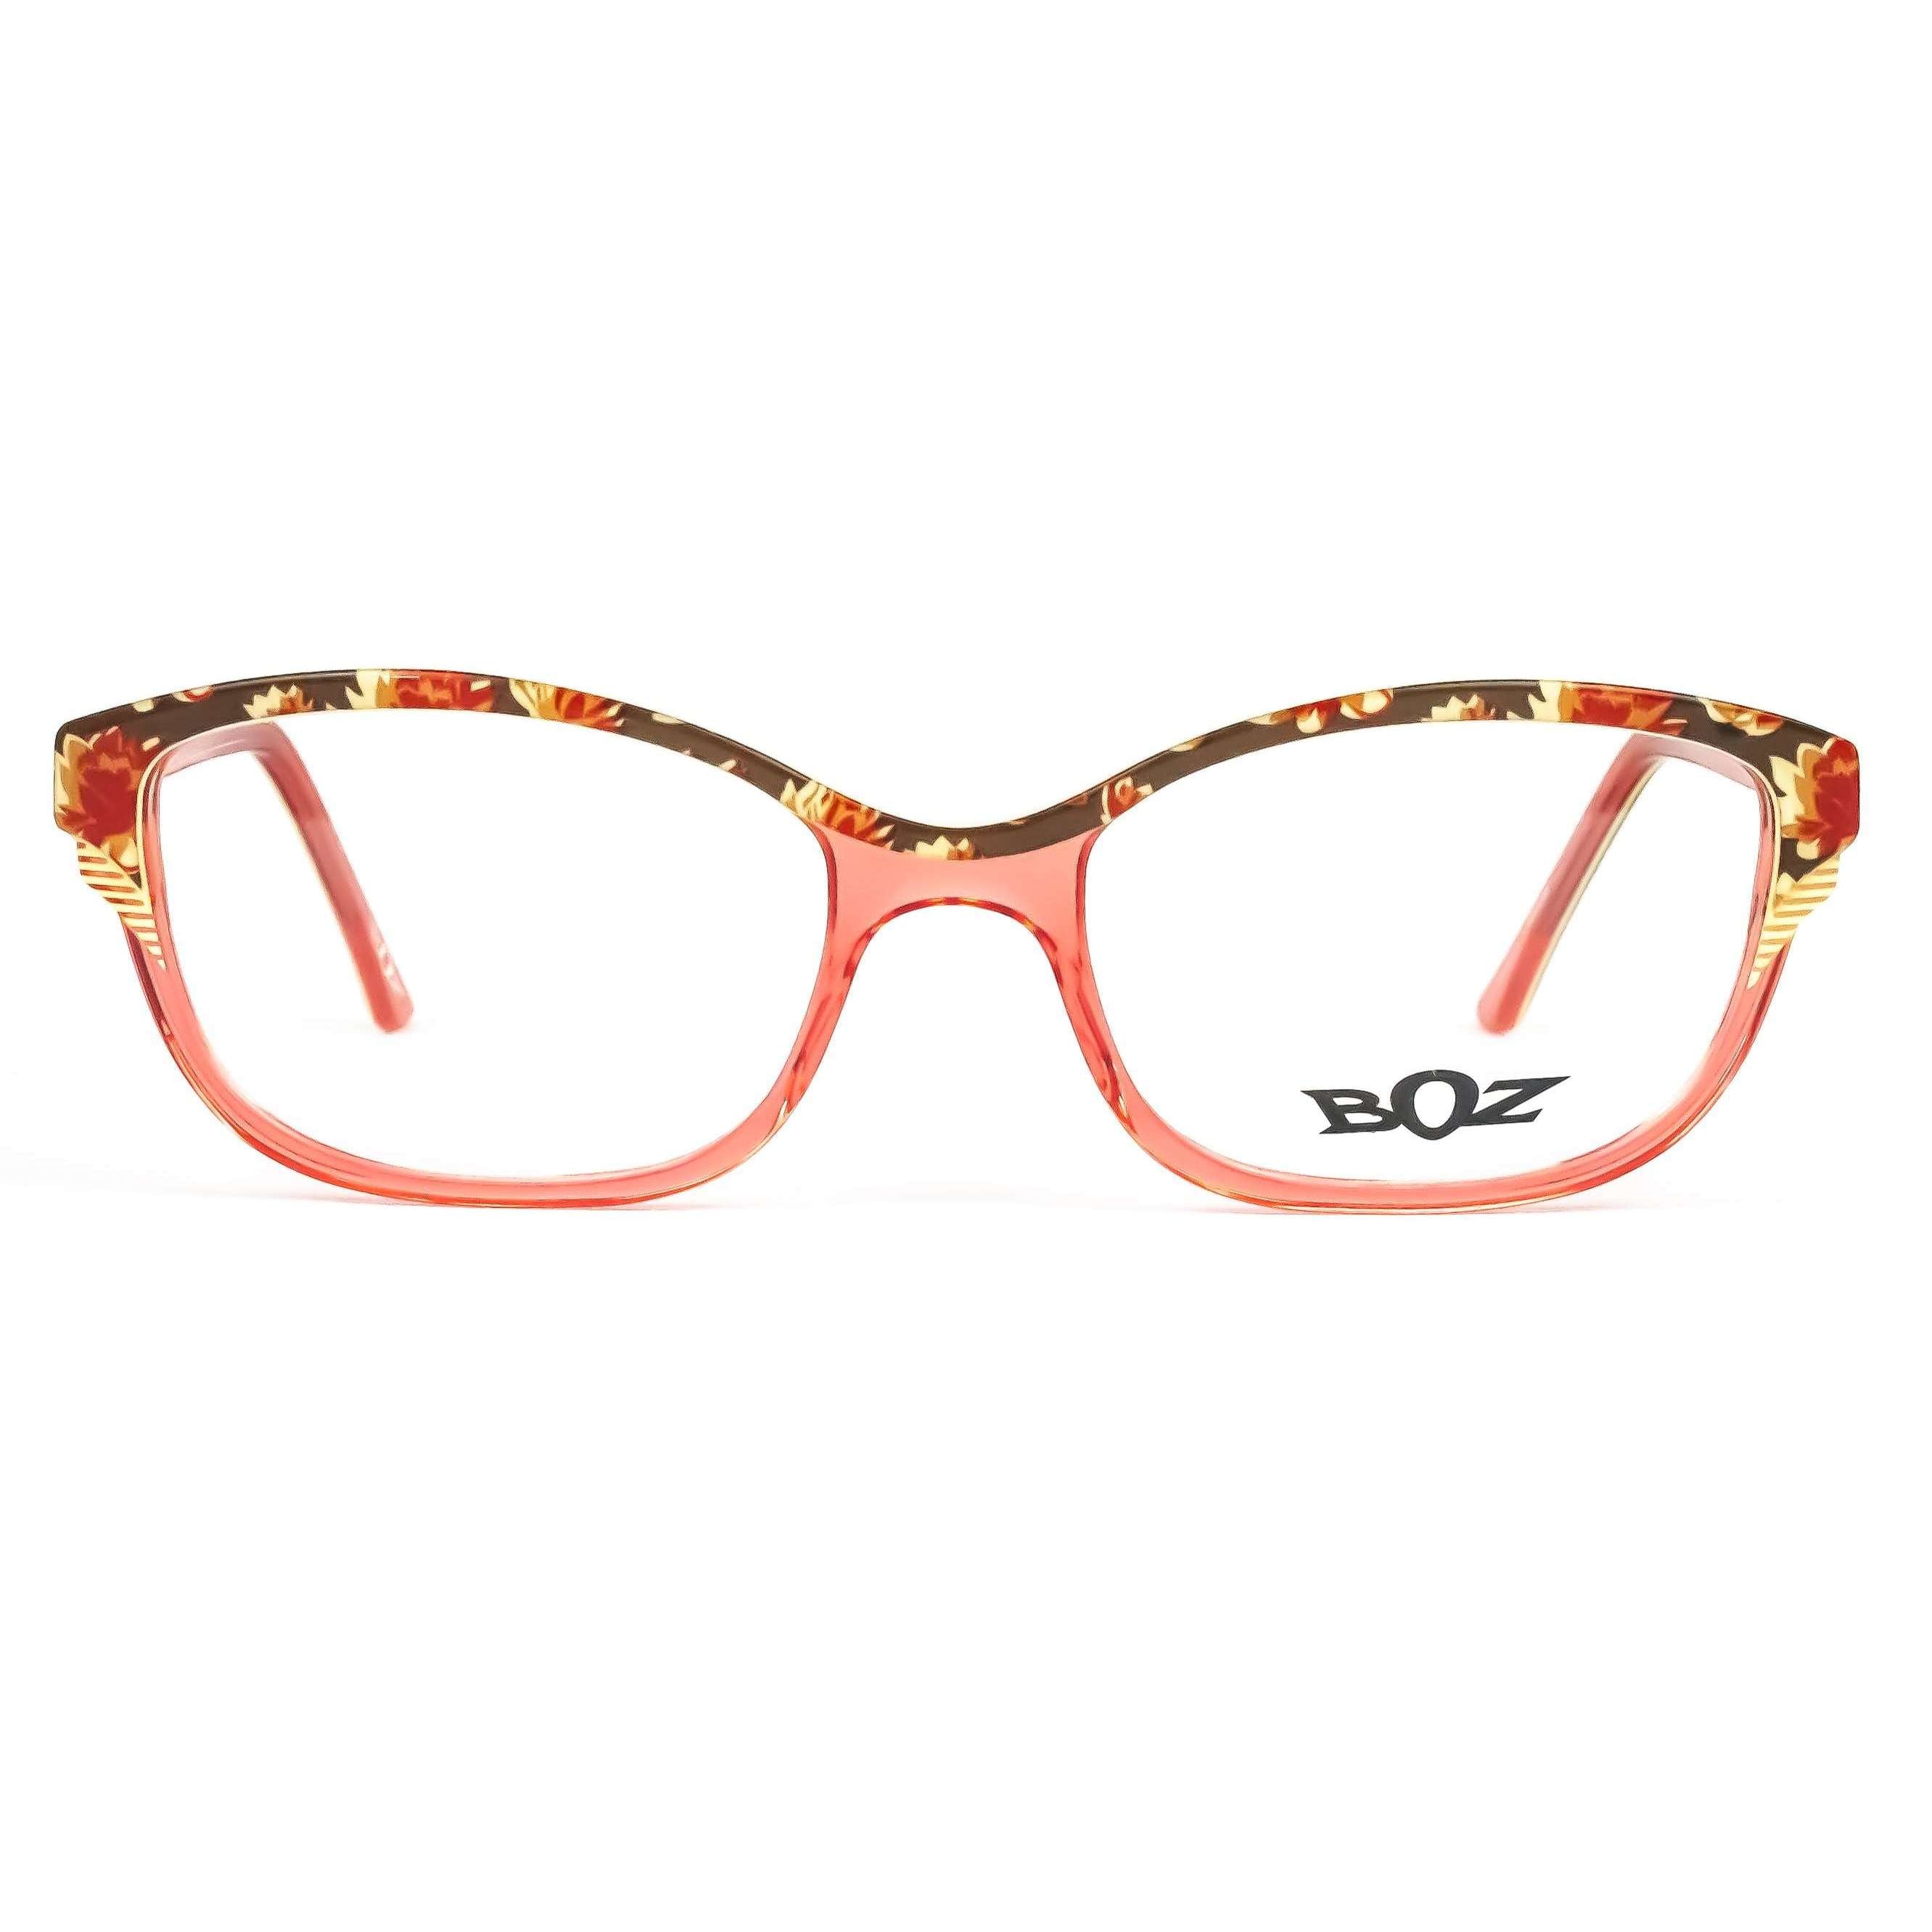 BOZ Radieuse Pink Cat Eye Glasses